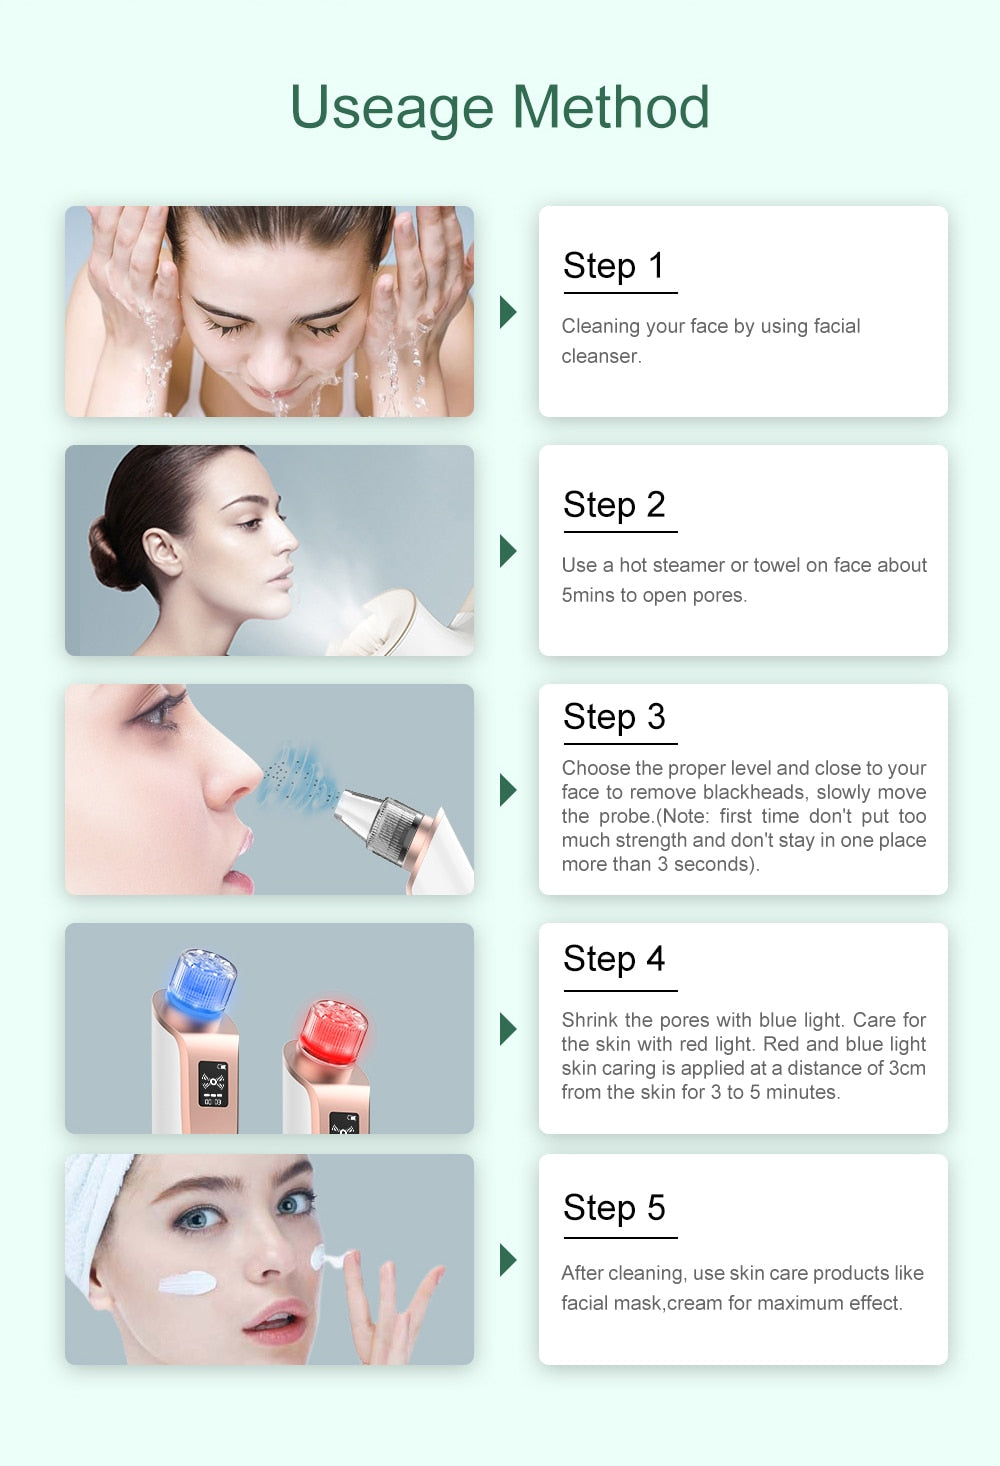 Usage Method for remove blackheads on skin.